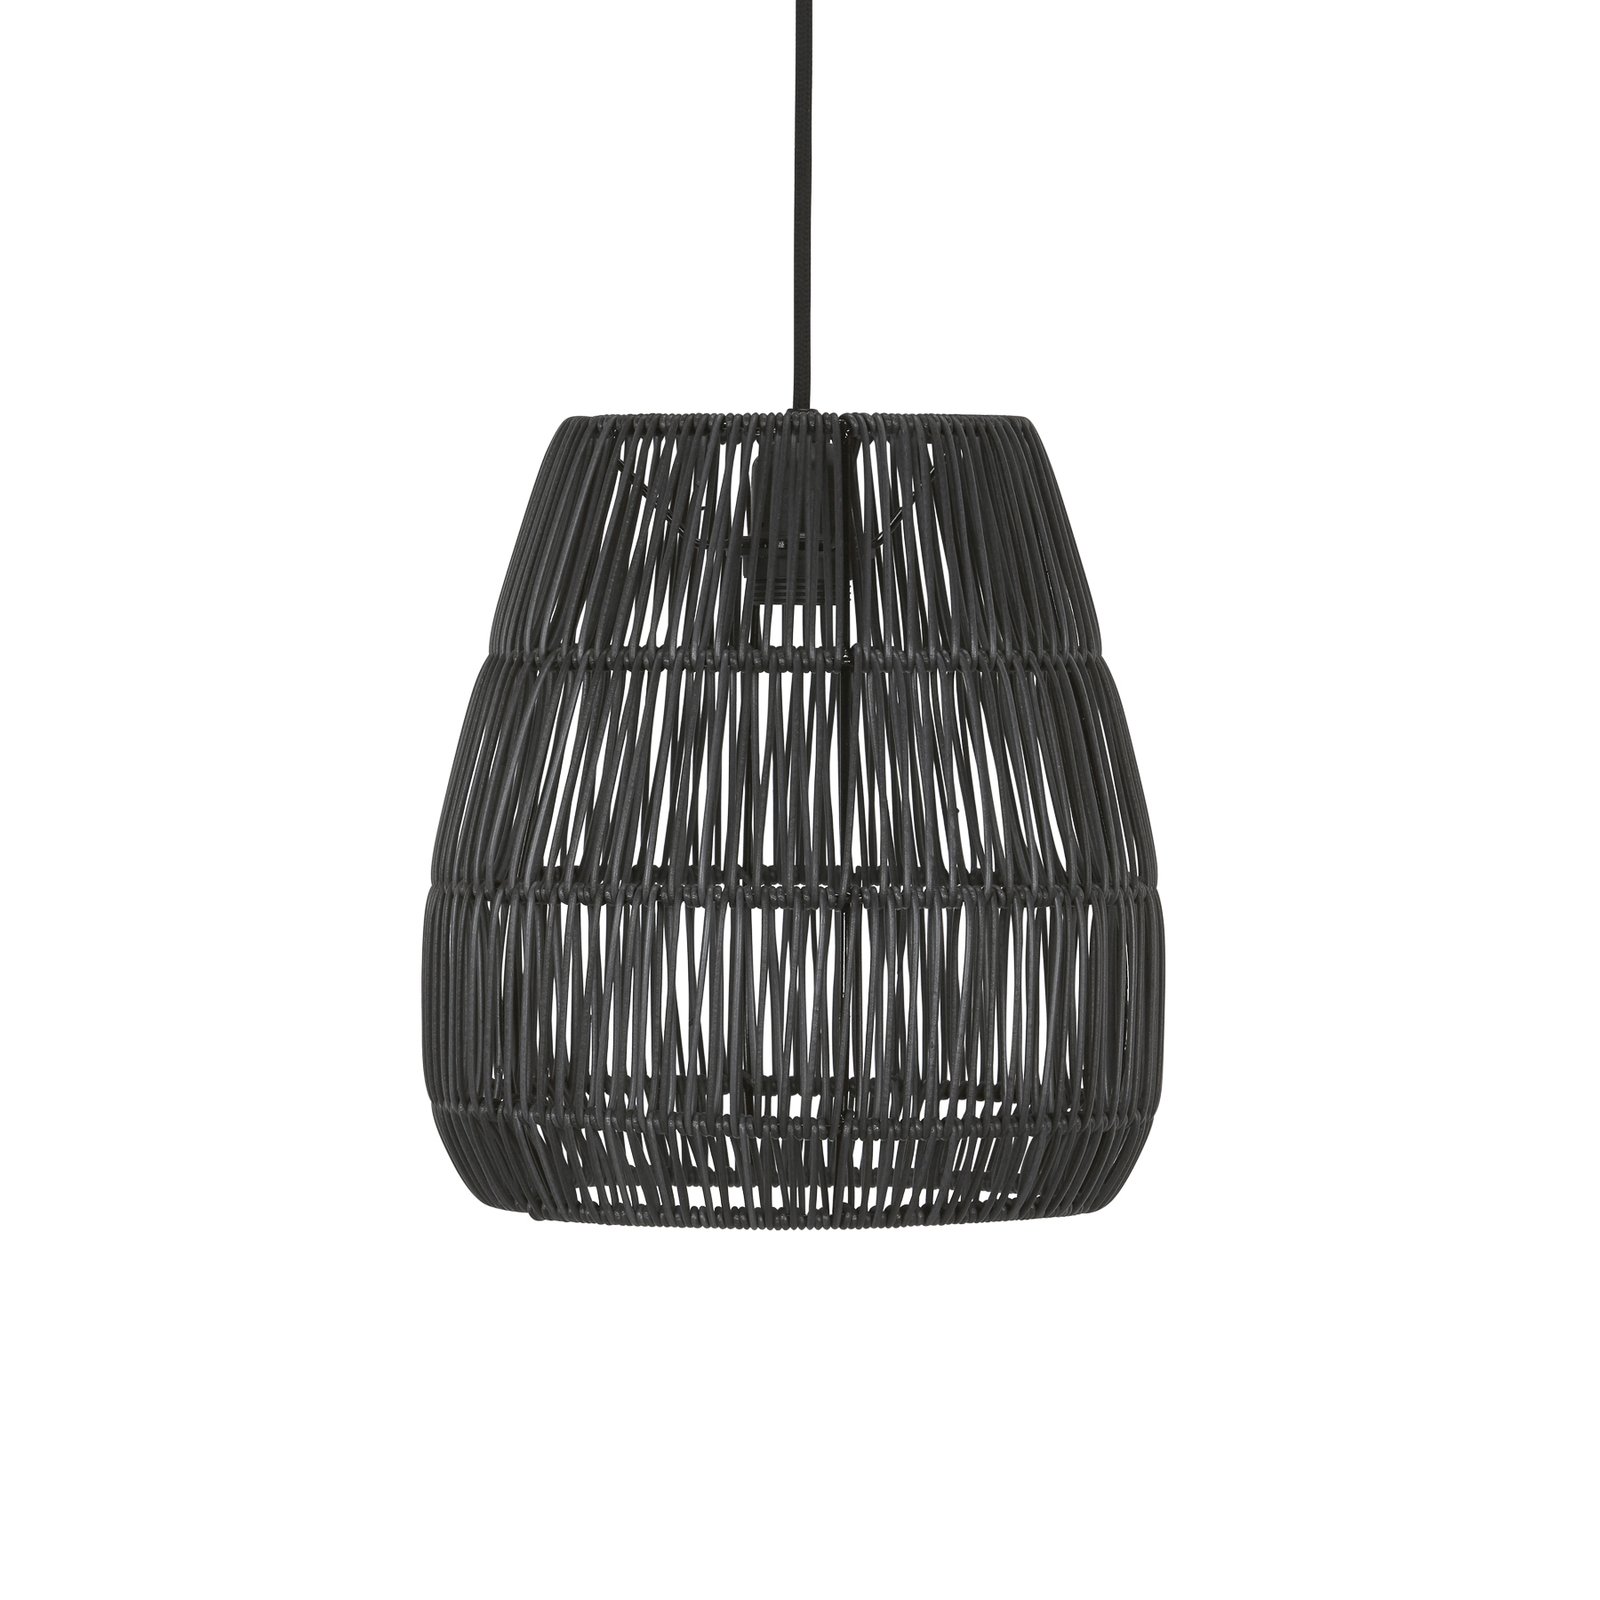 PR Home Saigon hanglamp, rotanlook, zwart, Ø 28 cm